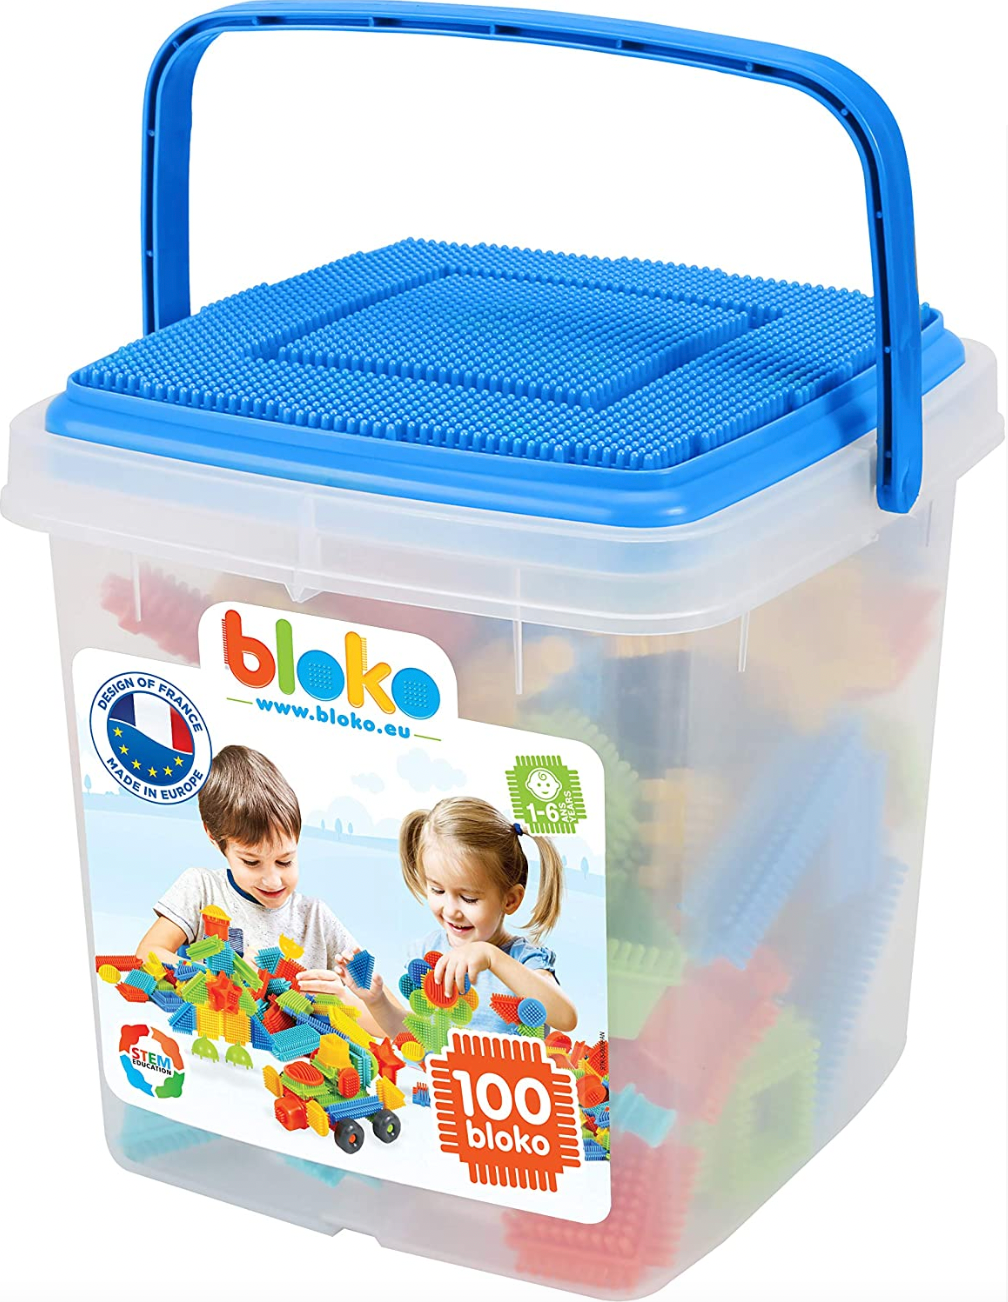 Bloko Building Toy 100 Piece Barrel